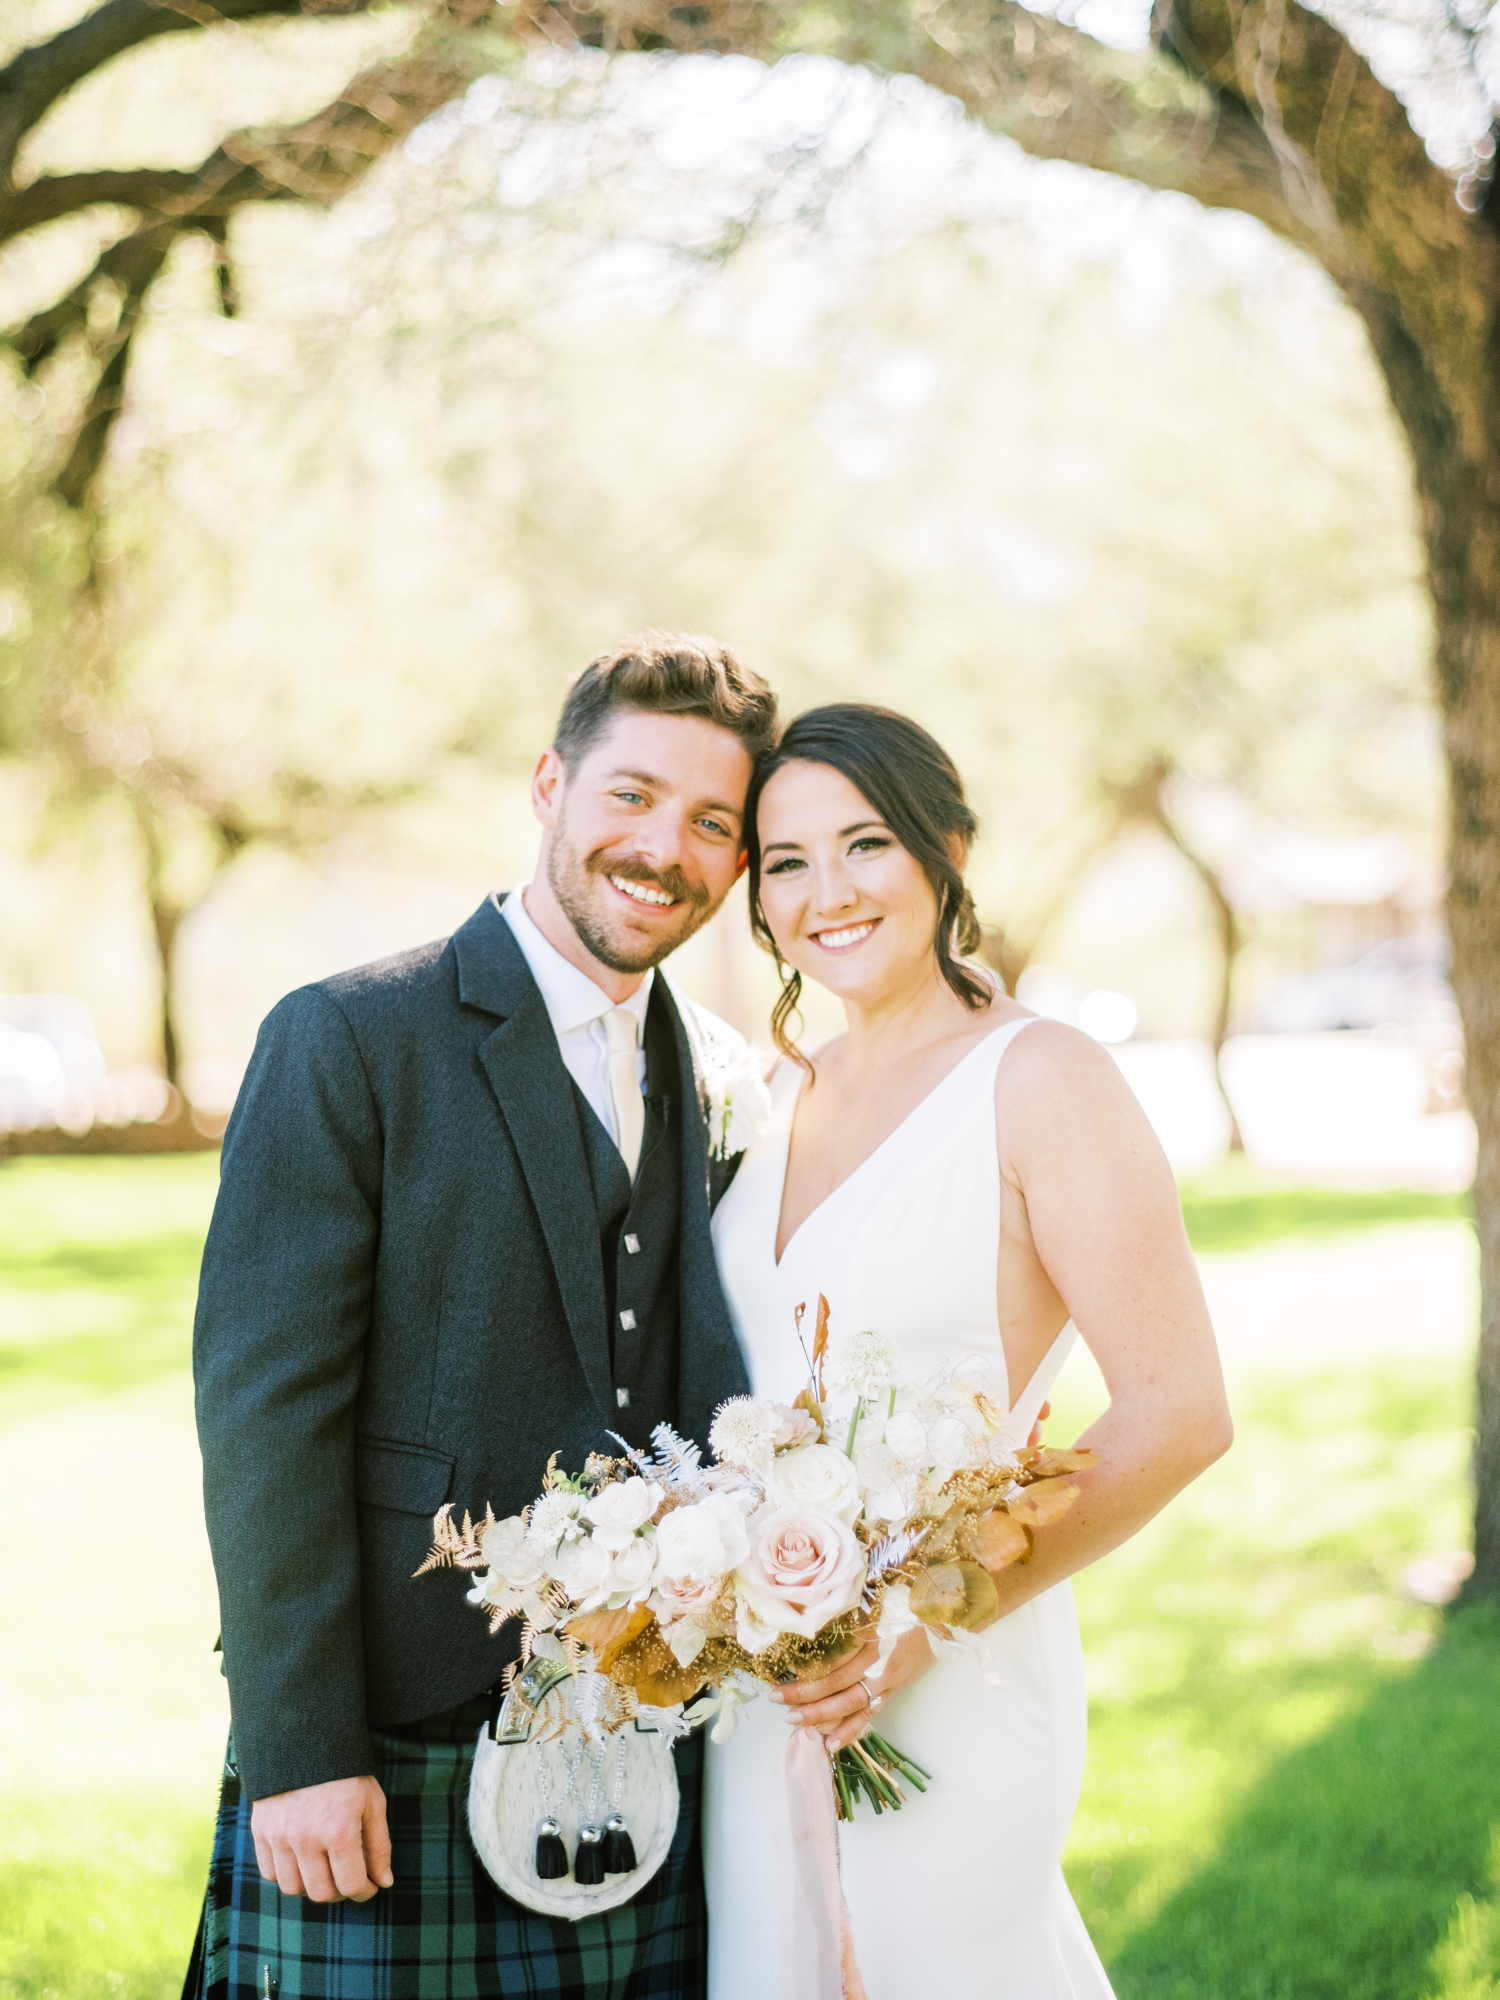 Marissa & Jeffrey’s Wedding at Saguaro Lake Guest Ranch | Rachael ...